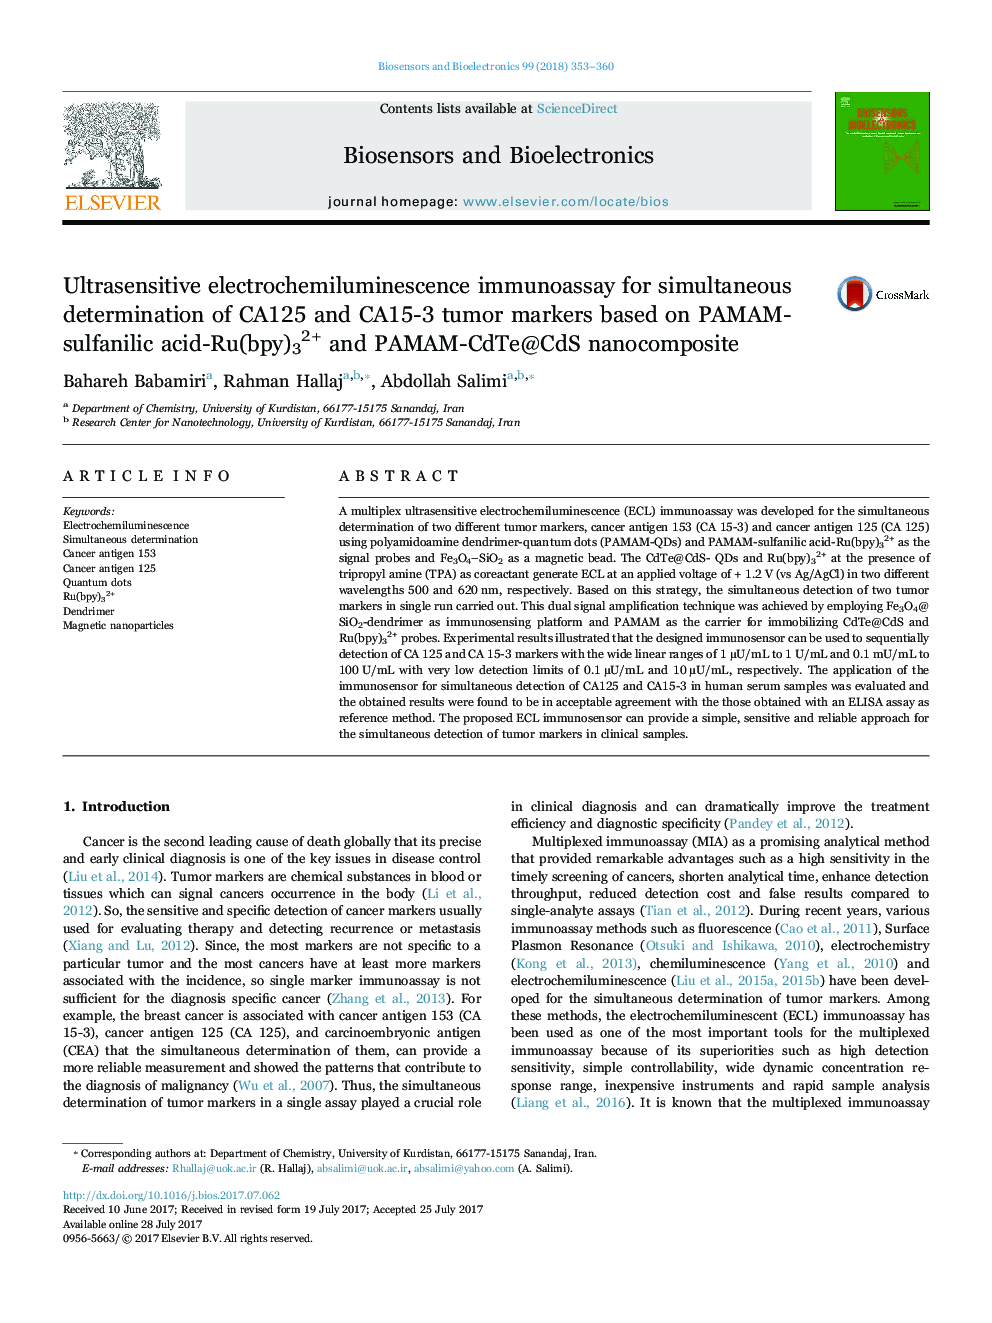 Ultrasensitive electrochemiluminescence immunoassay for simultaneous determination of CA125 and CA15-3 tumor markers based on PAMAM-sulfanilic acid-Ru(bpy)32+ and PAMAM-CdTe@CdS nanocomposite